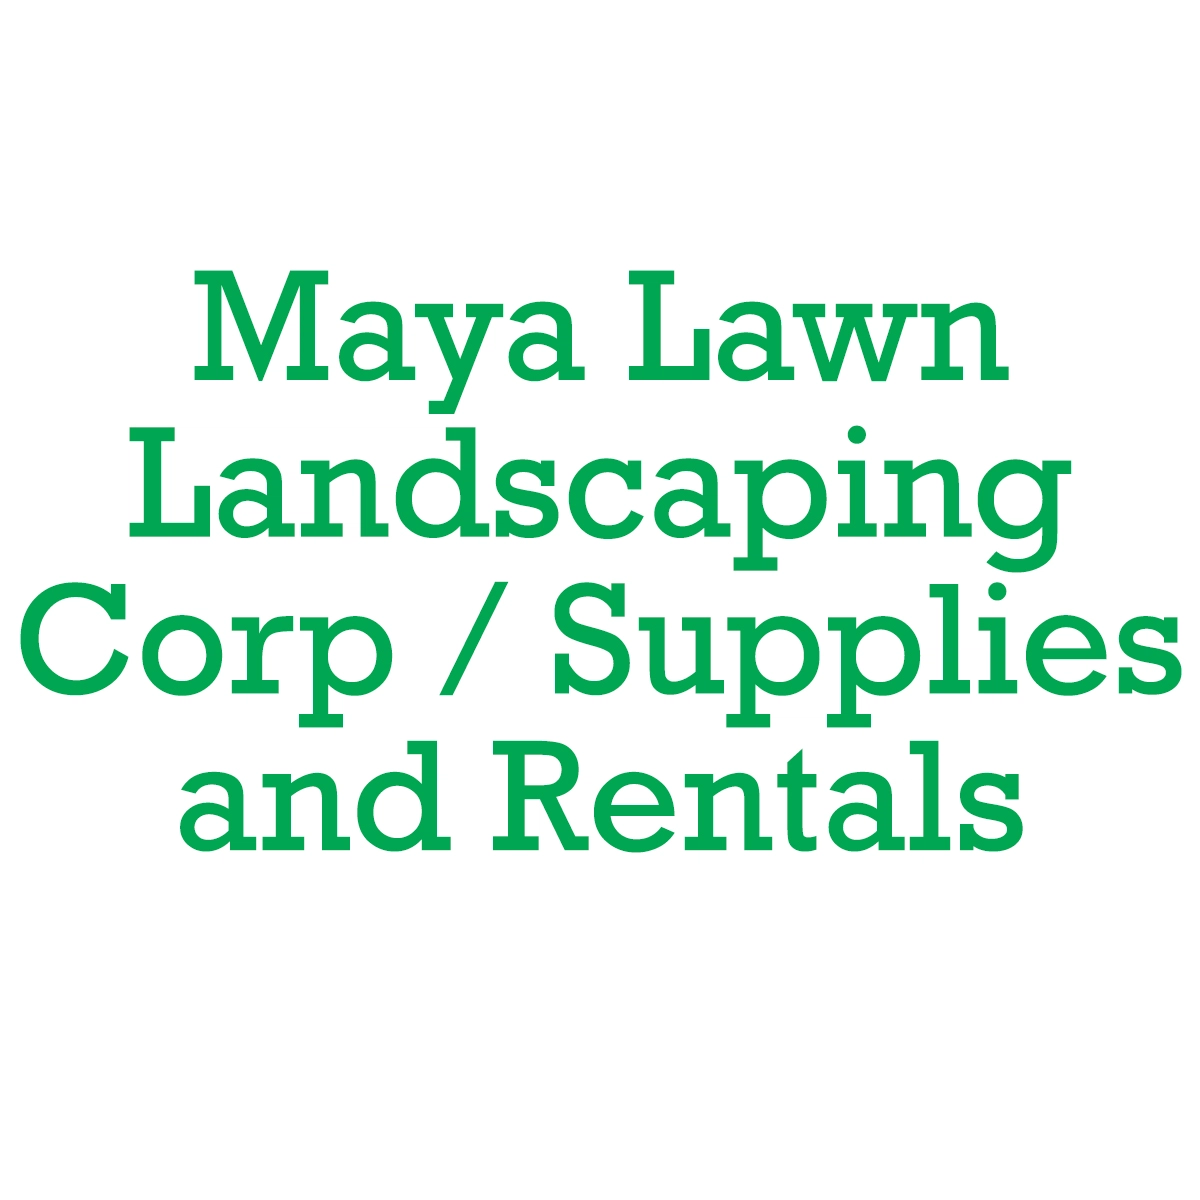 Maya Lawn Landscaping Corp / Supplies and Rentals Logo